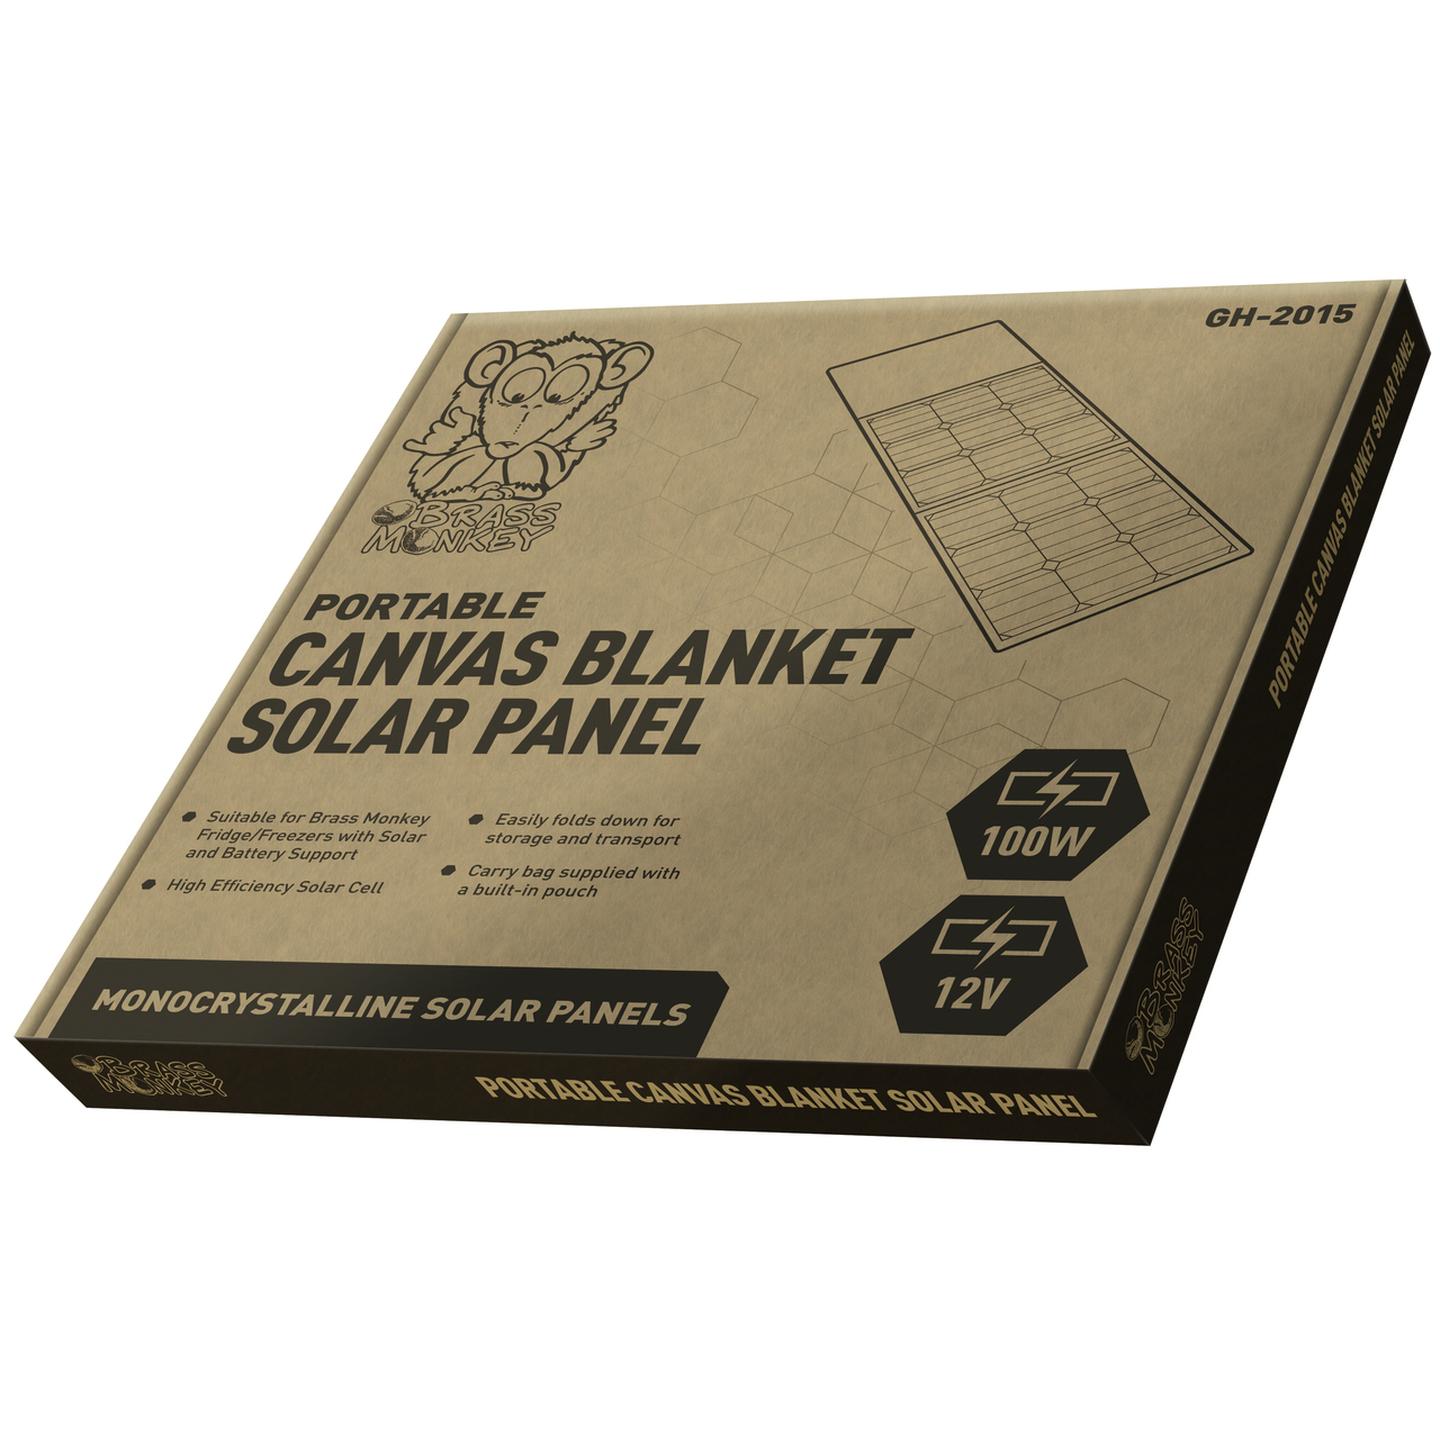 100 Watt Solar Canvas Blanket for Brass Monkey Fridge/Freezer with Solar and Battery Support